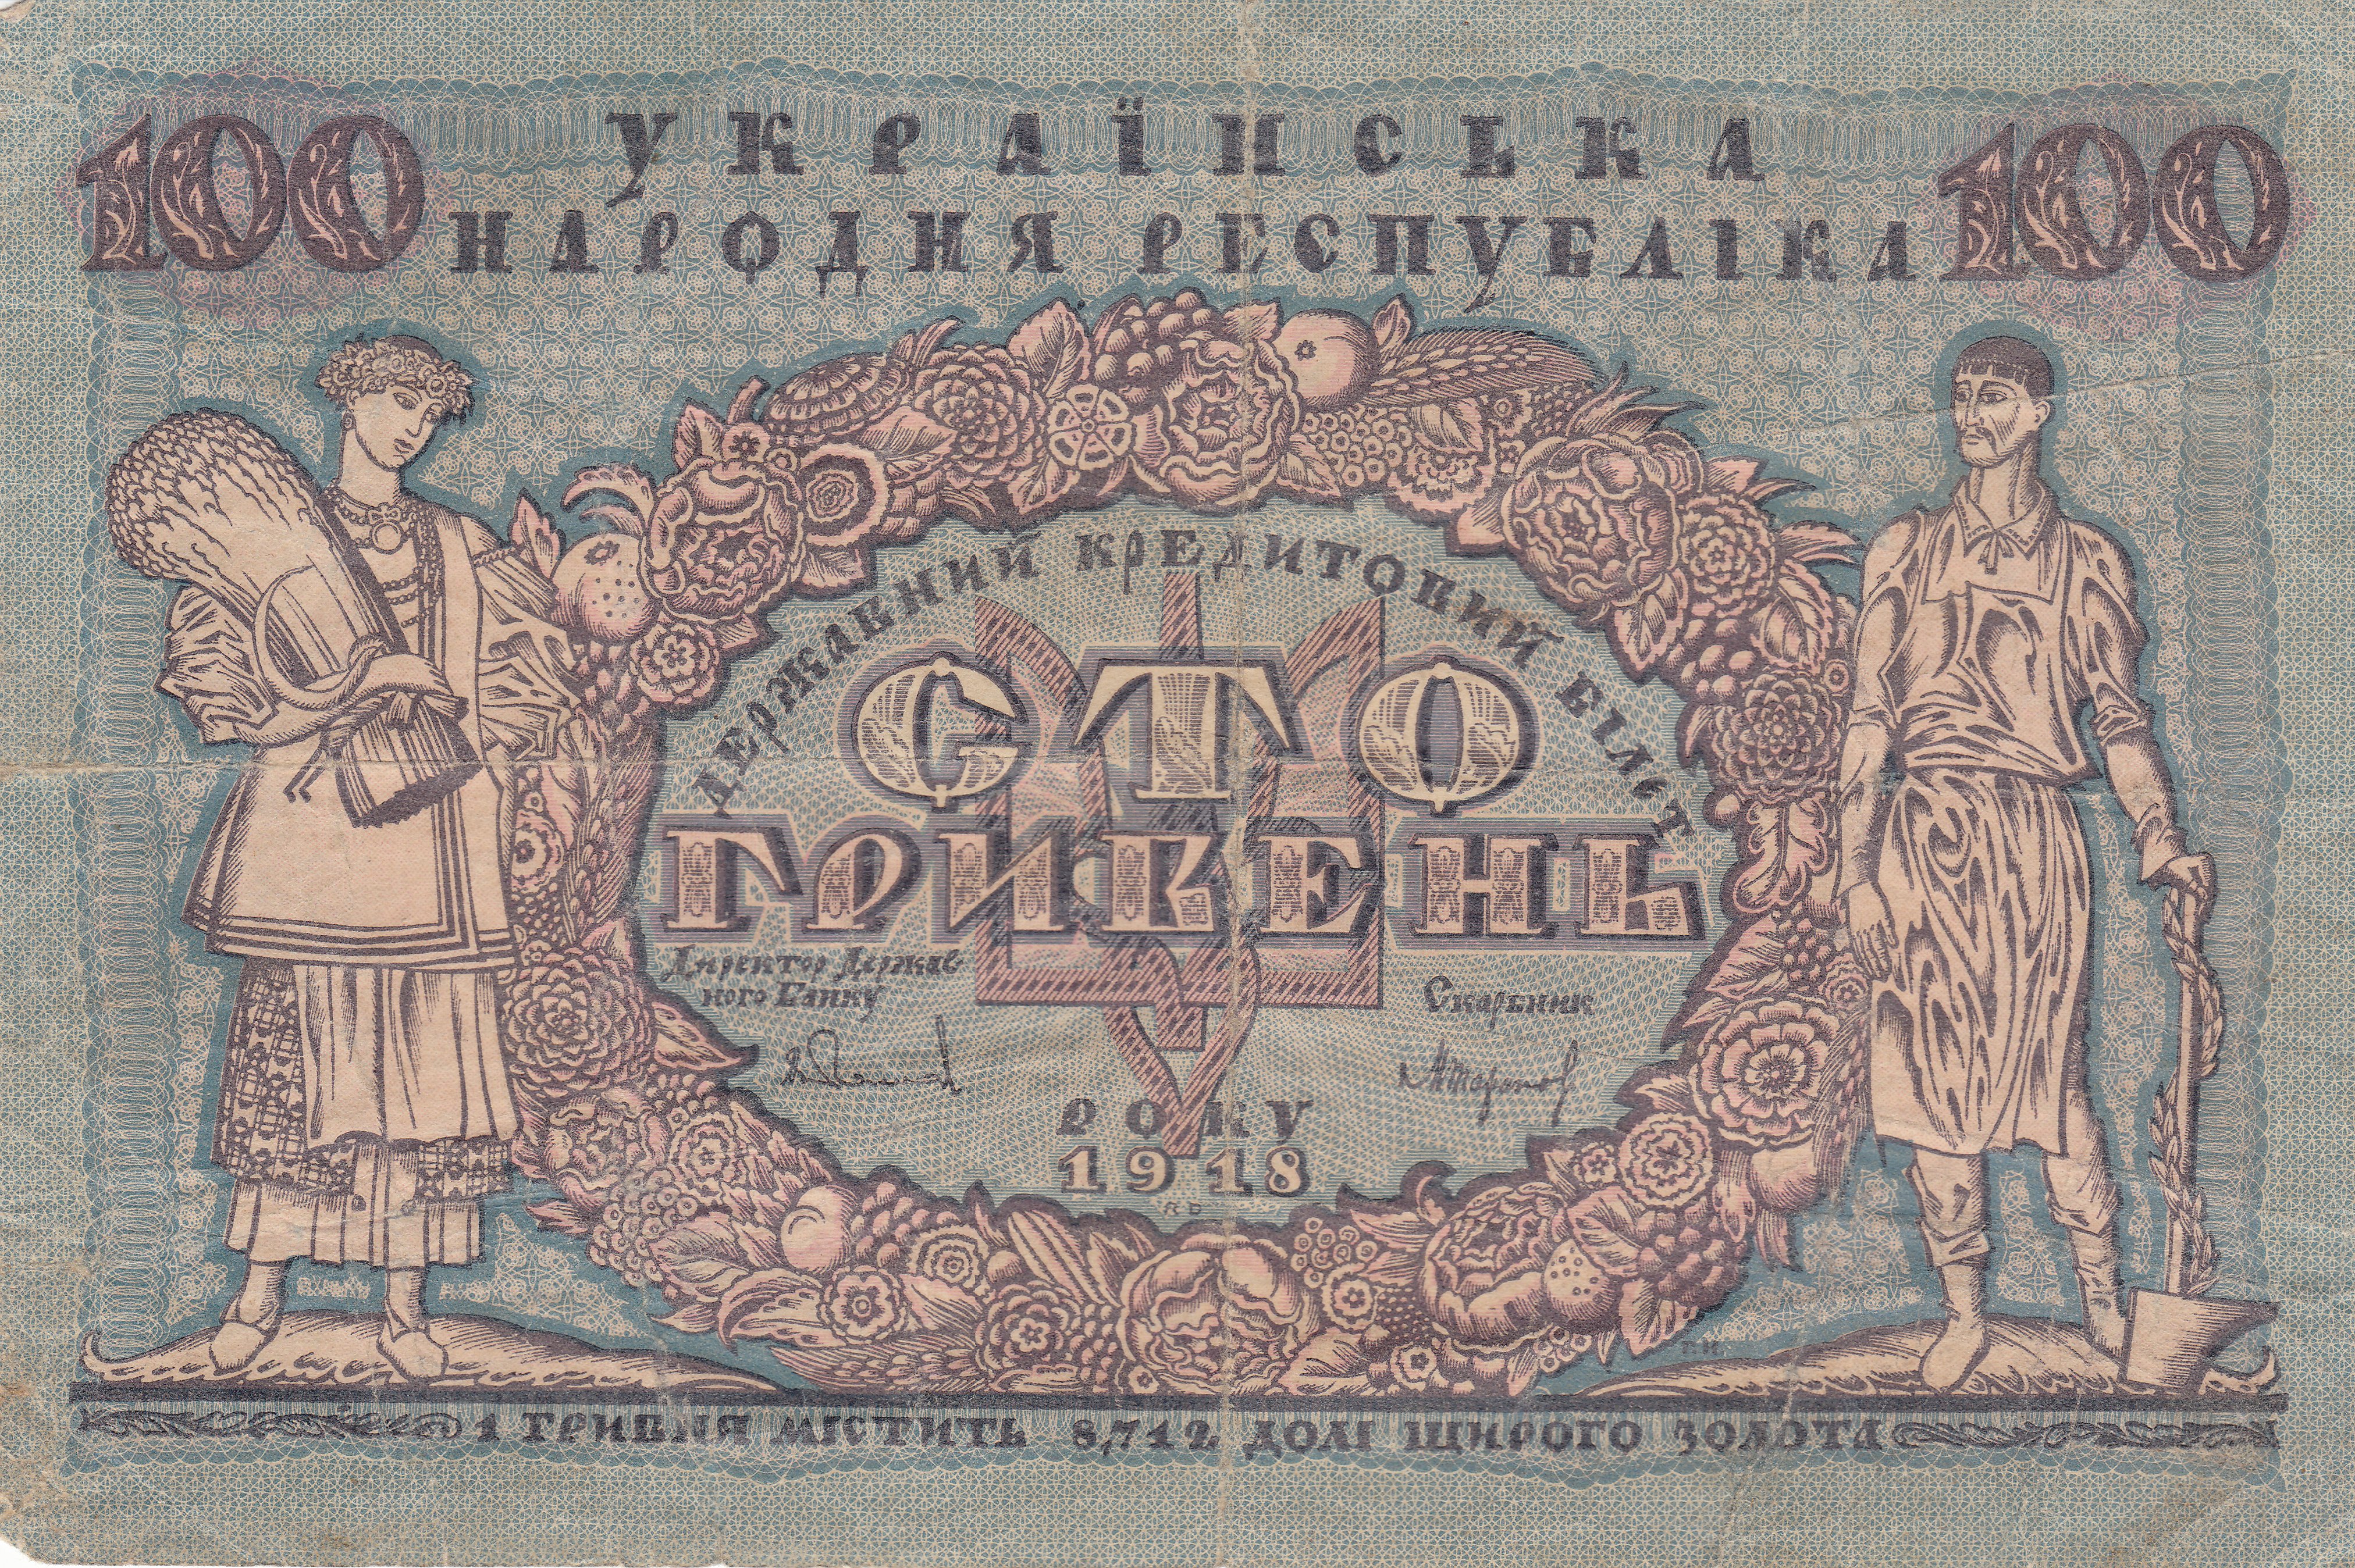 Ukrainian 100 hryvnia's note of the People's repub.jlic of Ukraine (1918) front side